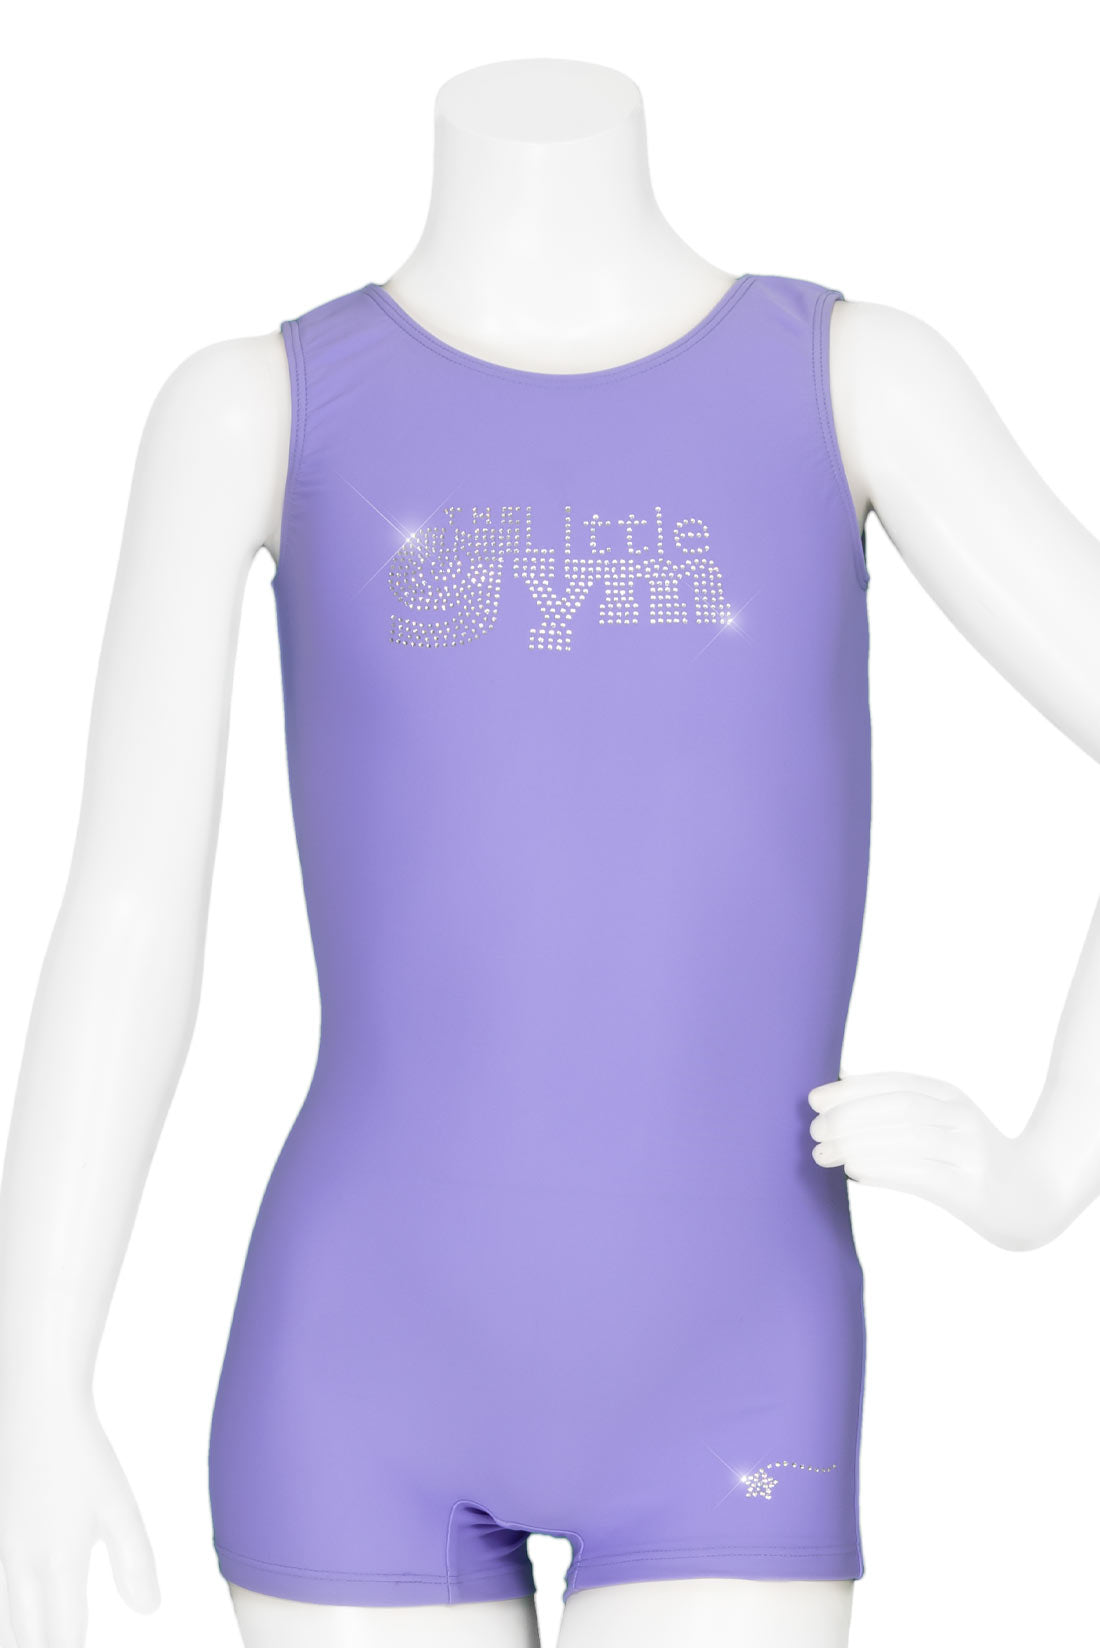 Purple sparkle unitard for girls' gymnastics by Destira, 2024